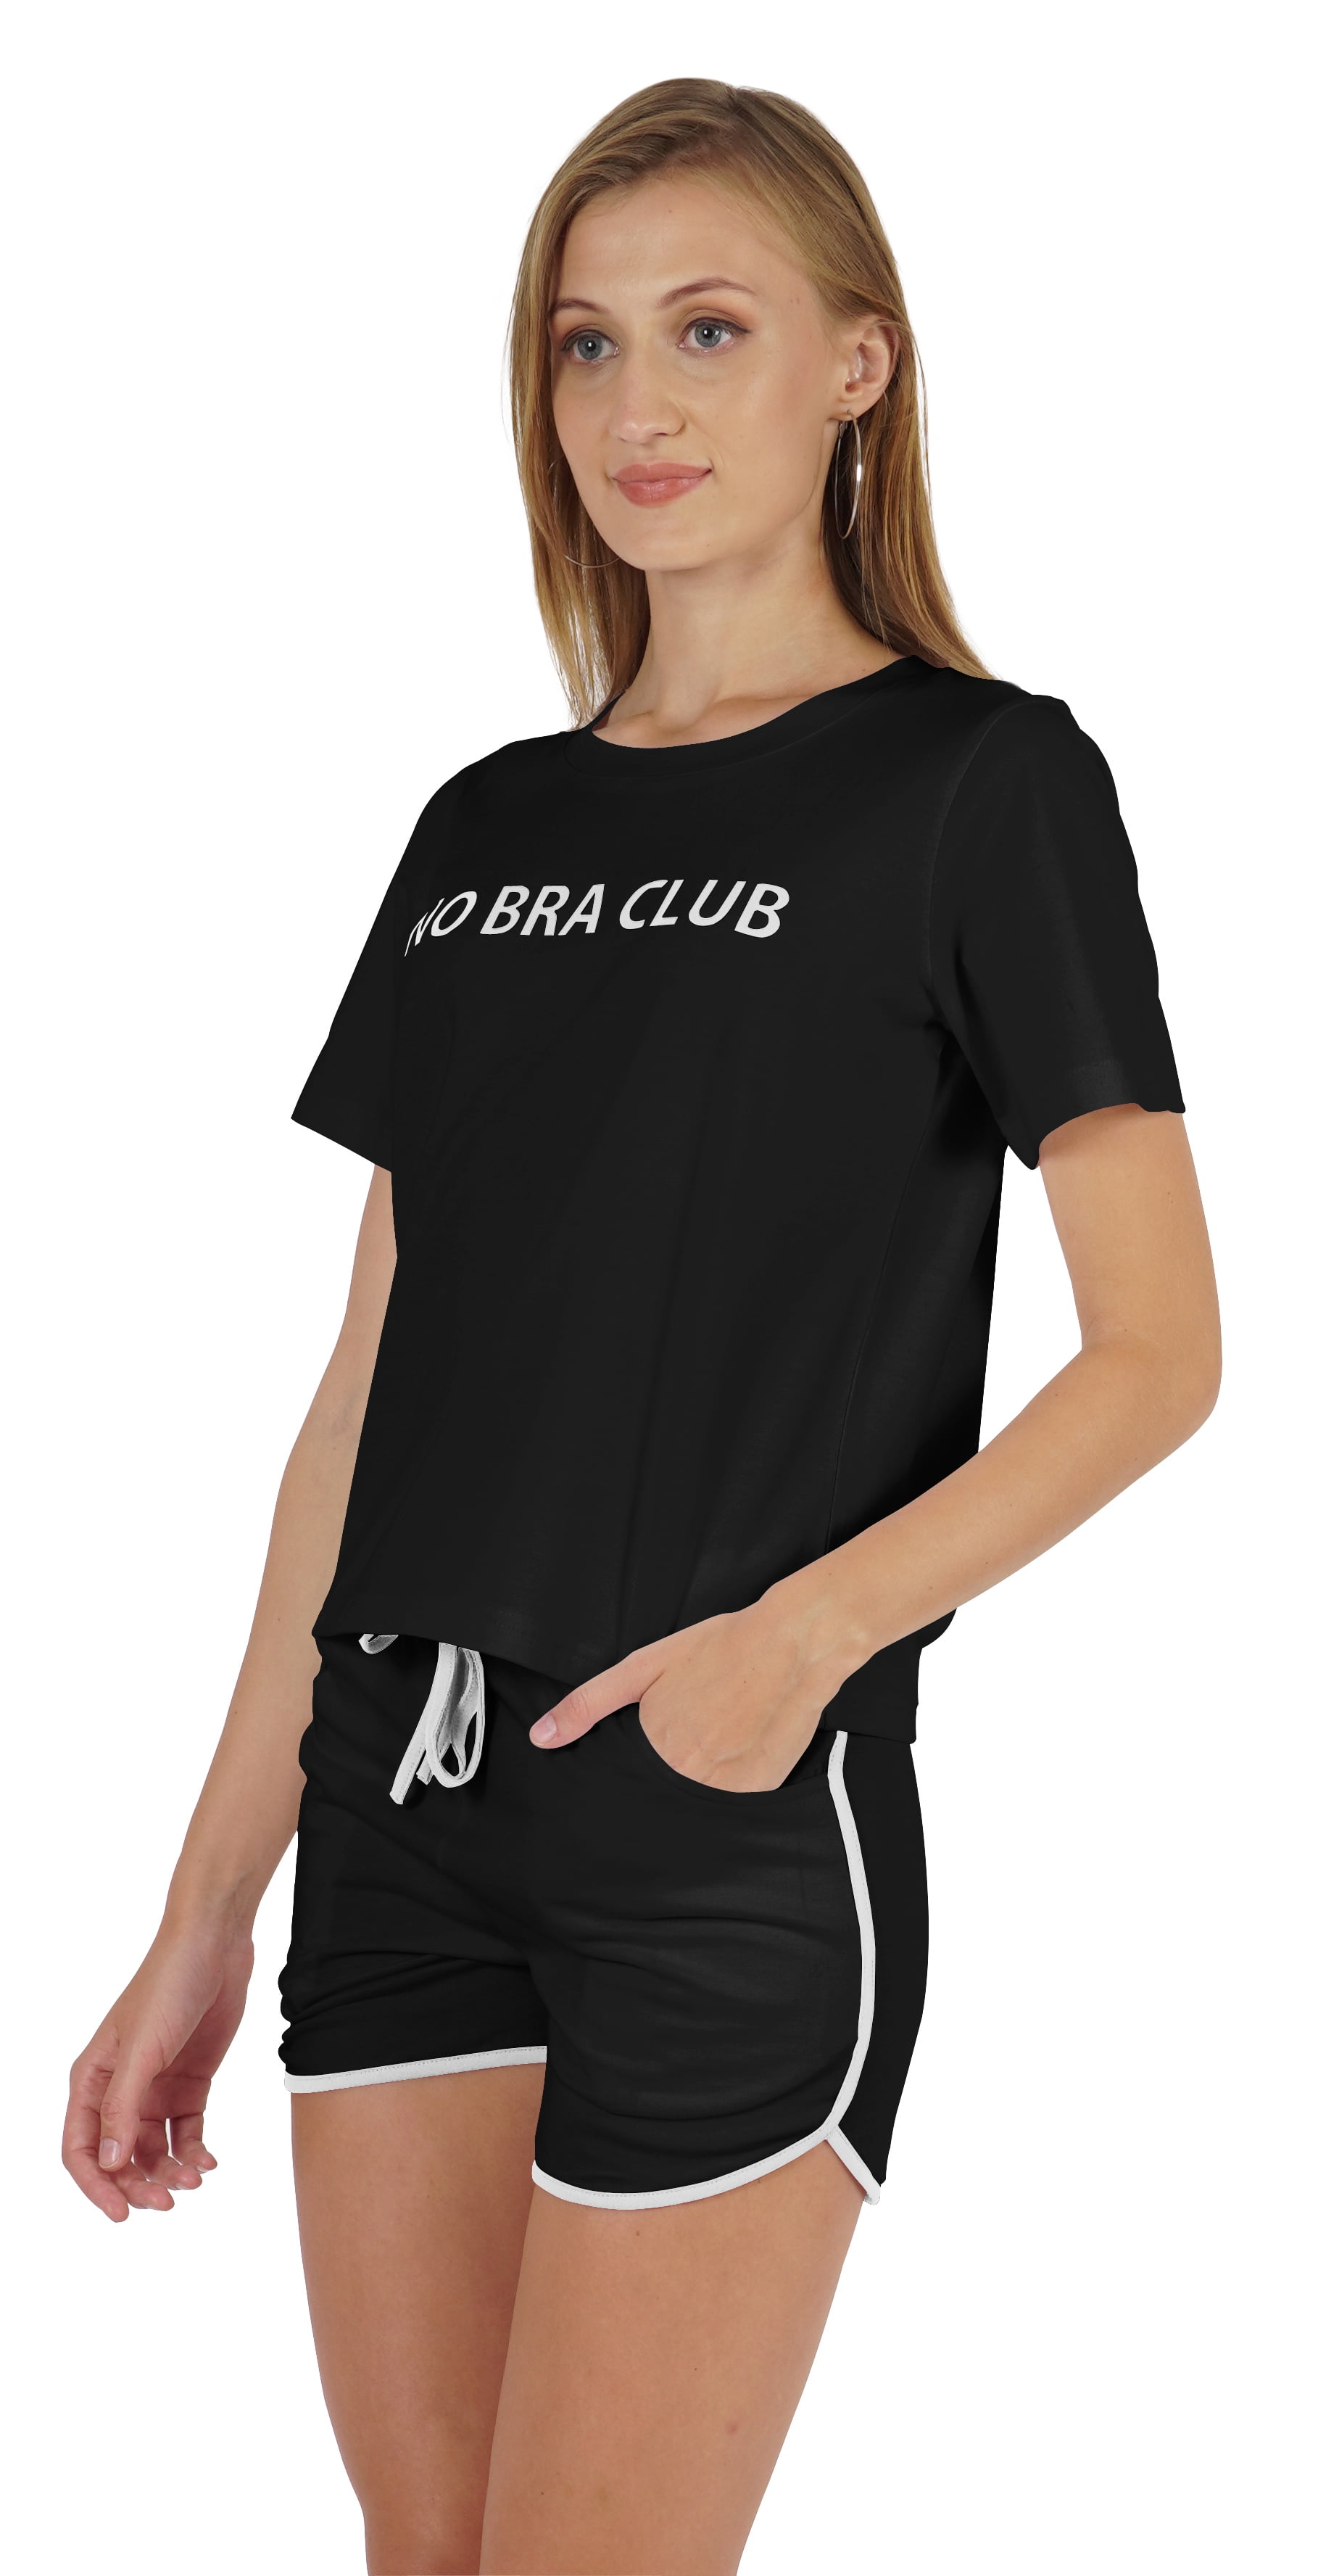 Inkmeso Women's Short Sleeve No Bra Club Go Braless Funny No Bra